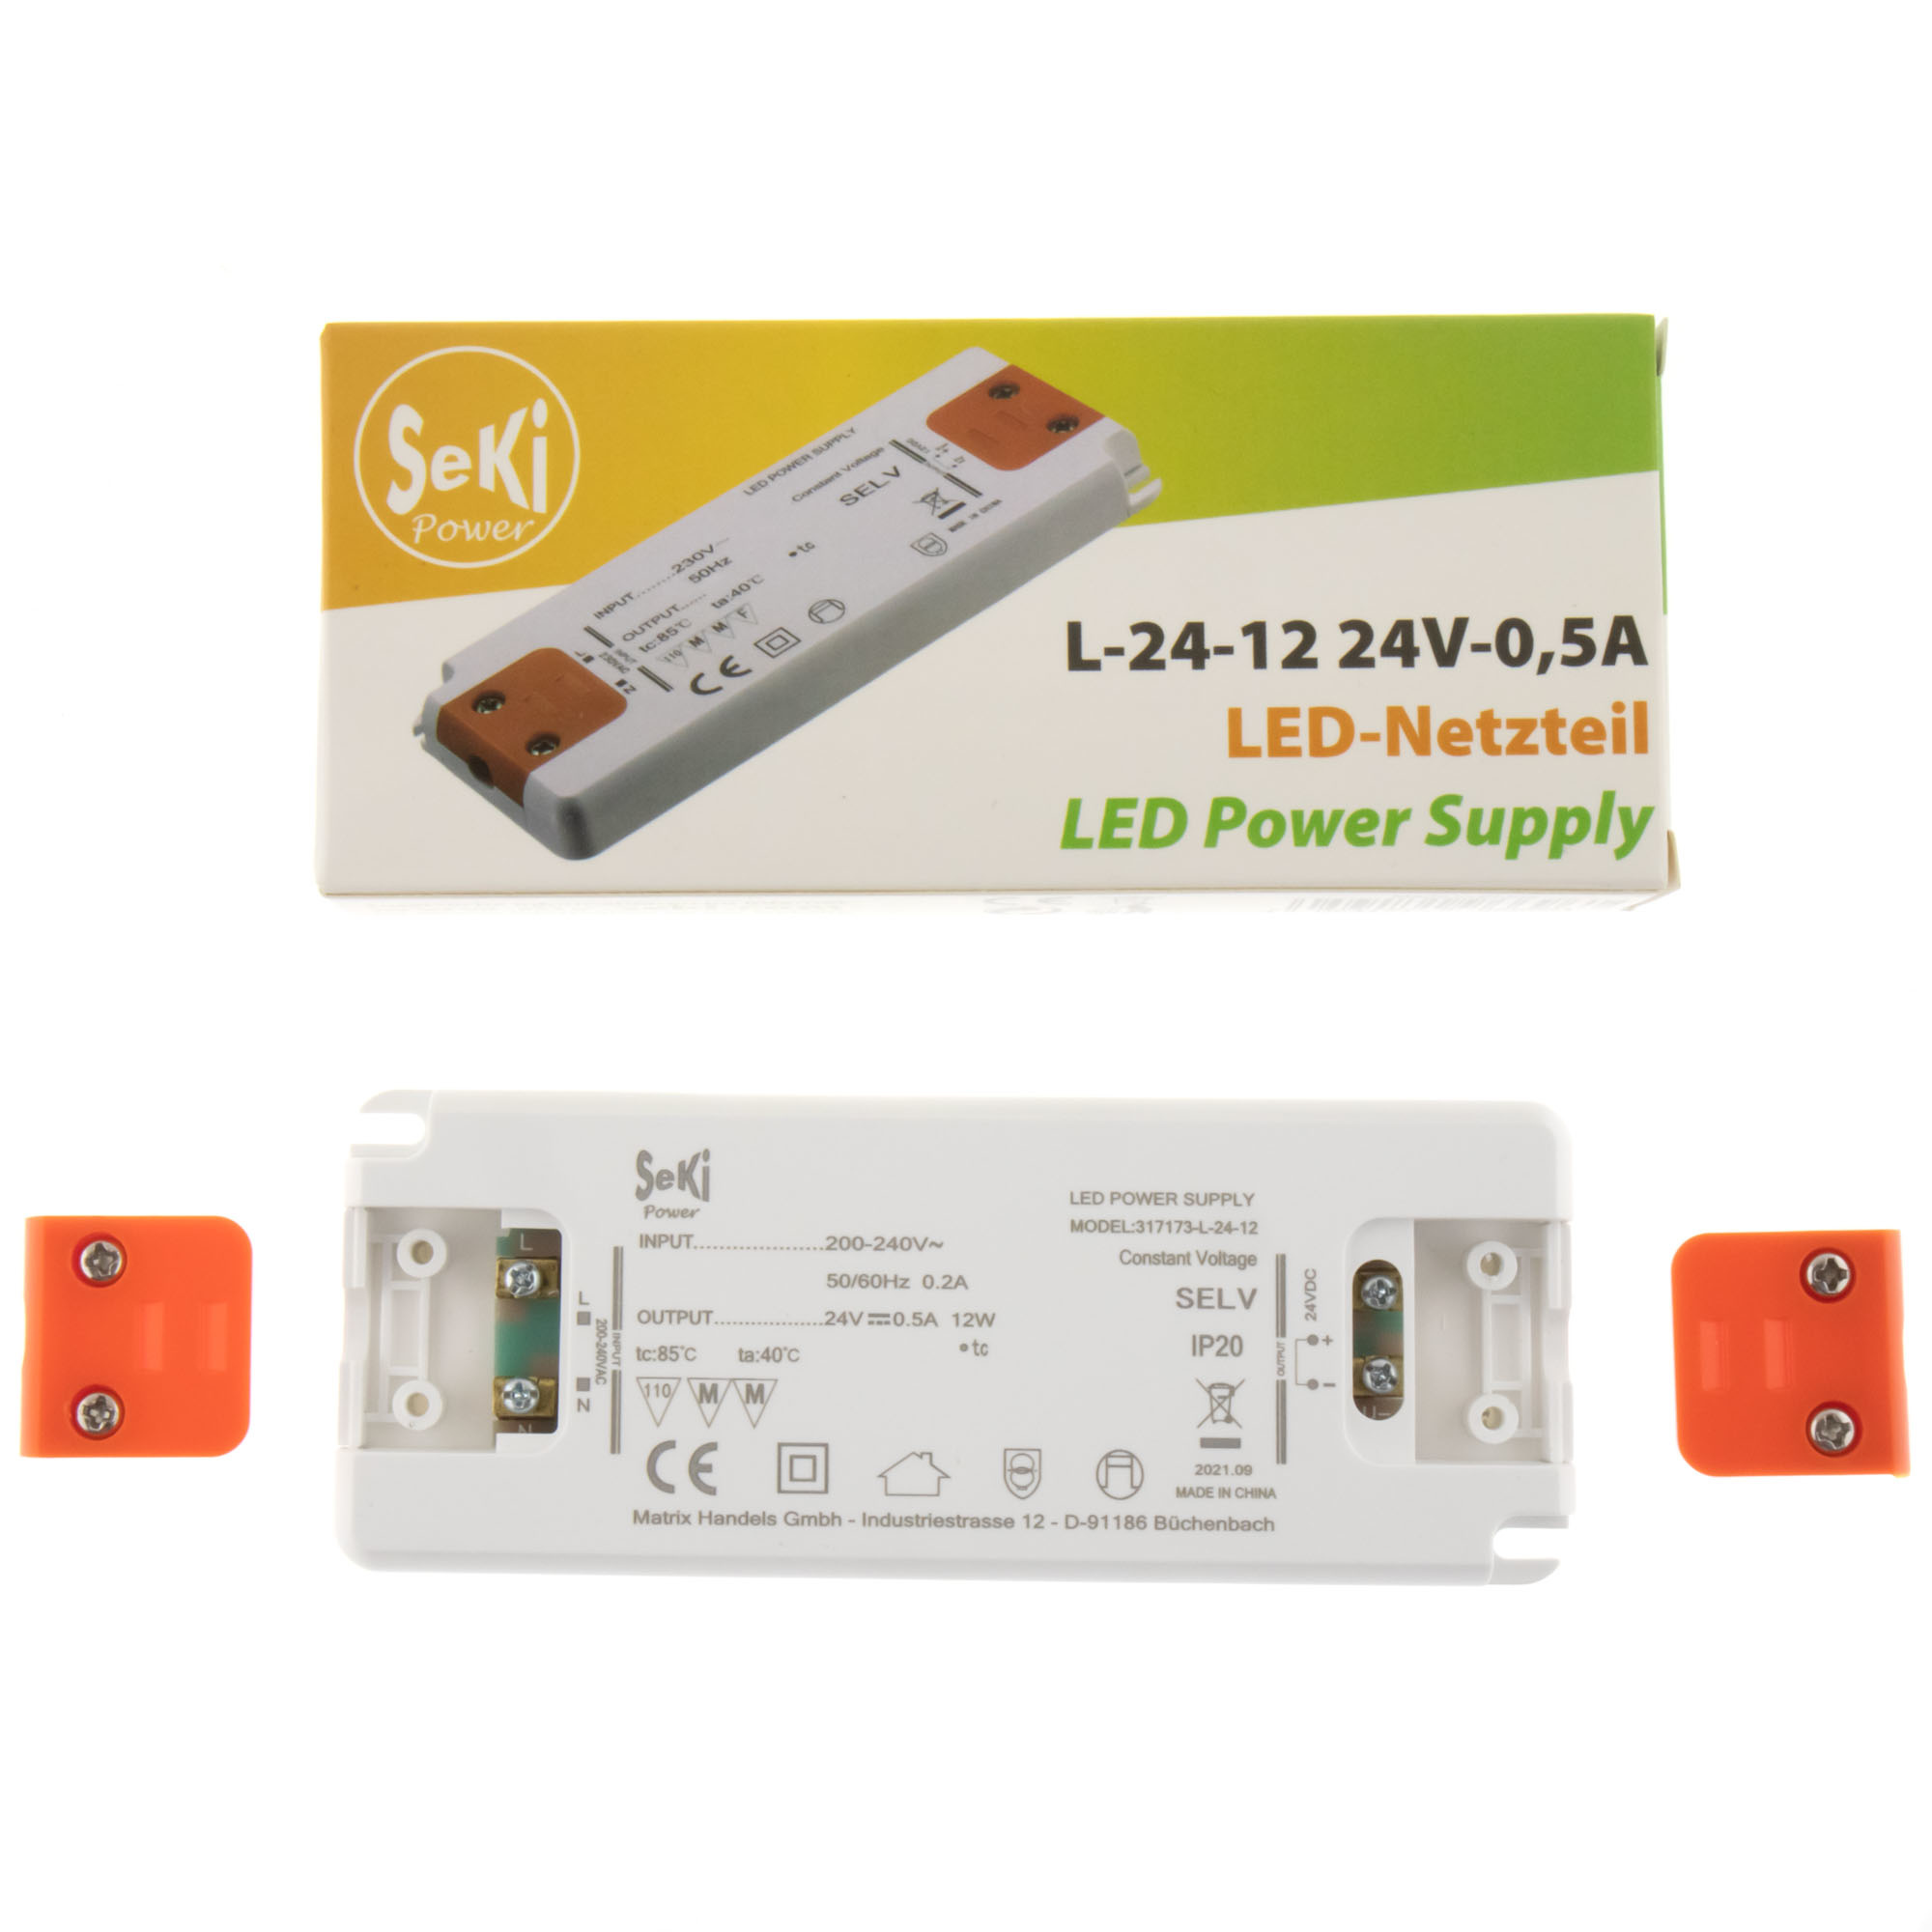 LED-Netzteil L-24-12 - 24V - 0,5A - 12W